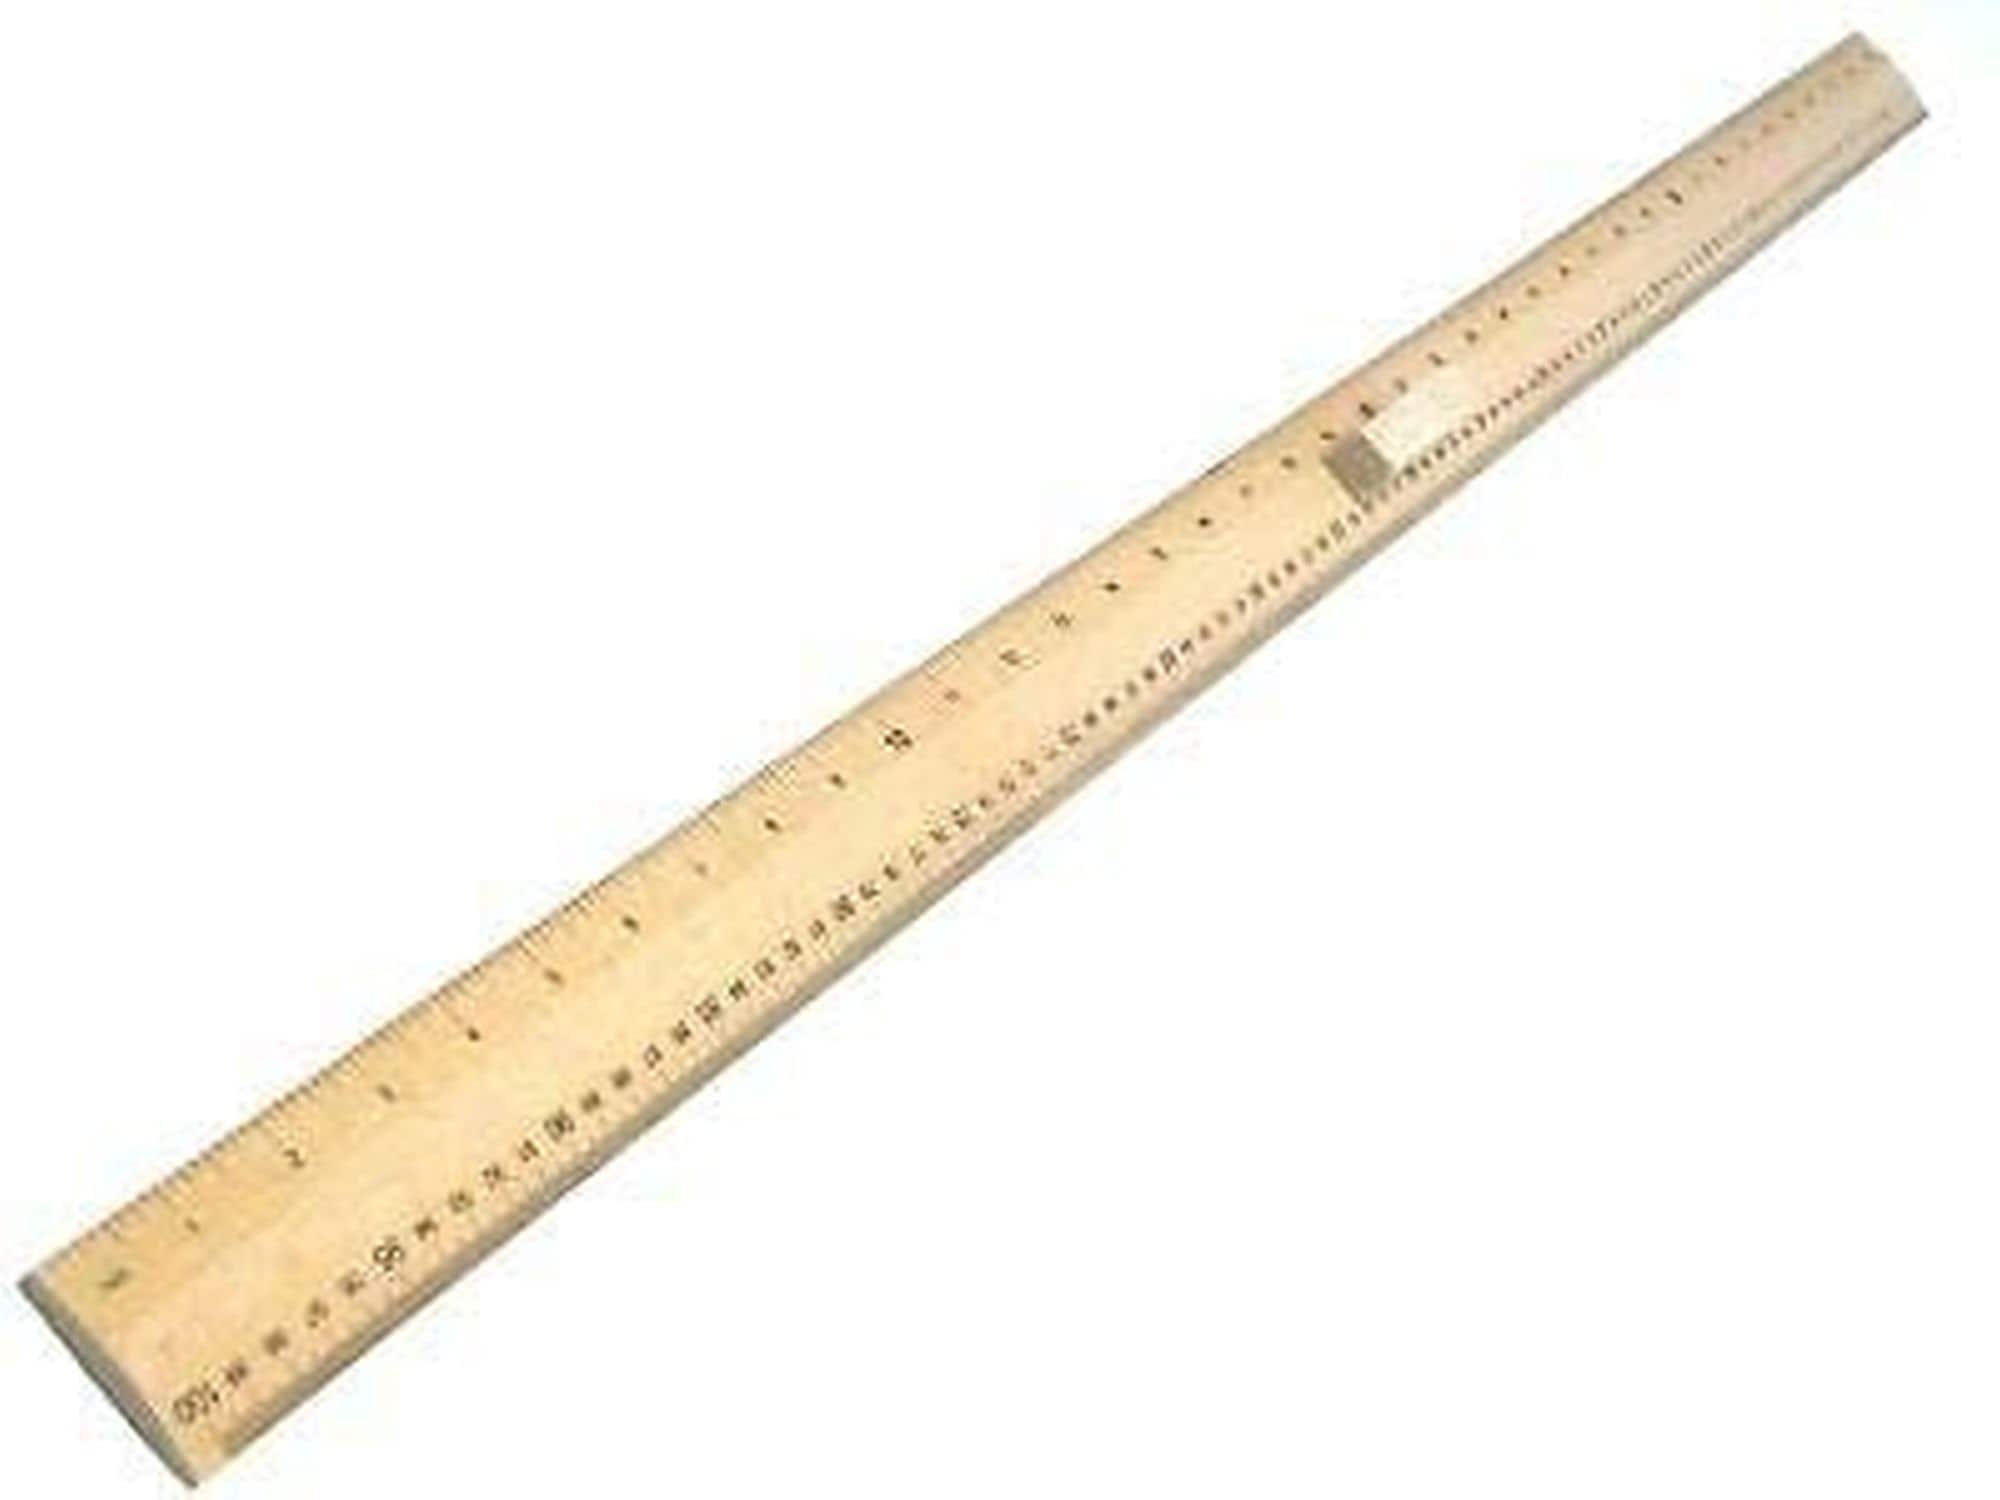 Wooden Rule Meter Yard Stick Ruler Imperial Metric Measurements Mm Cm Inches Markings Hardwood